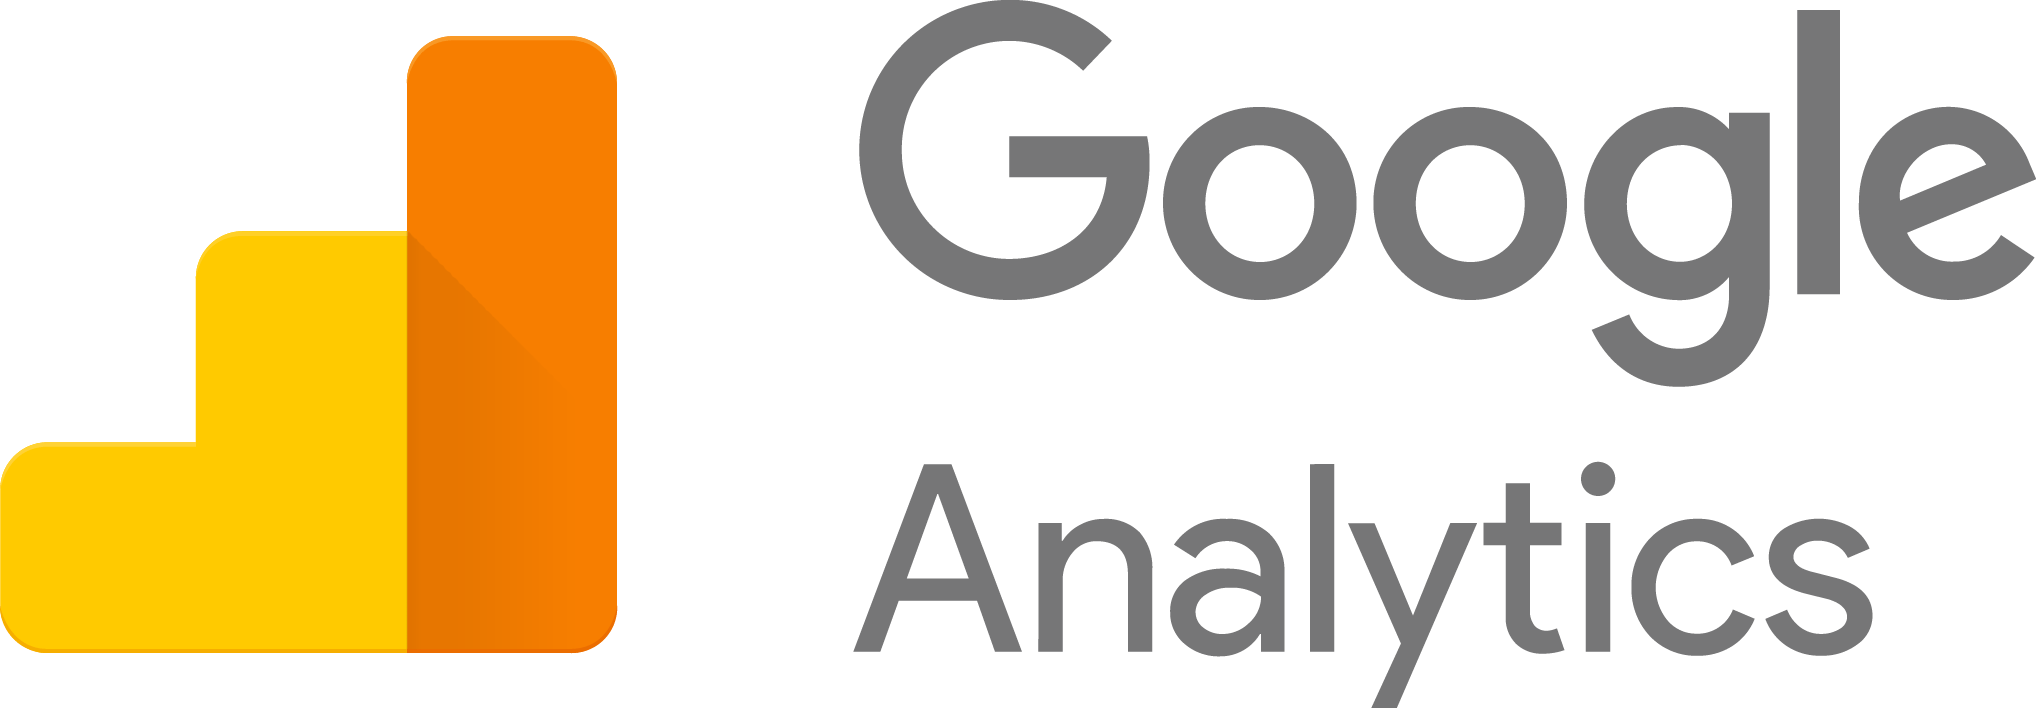 Logo Google Analytics Vector